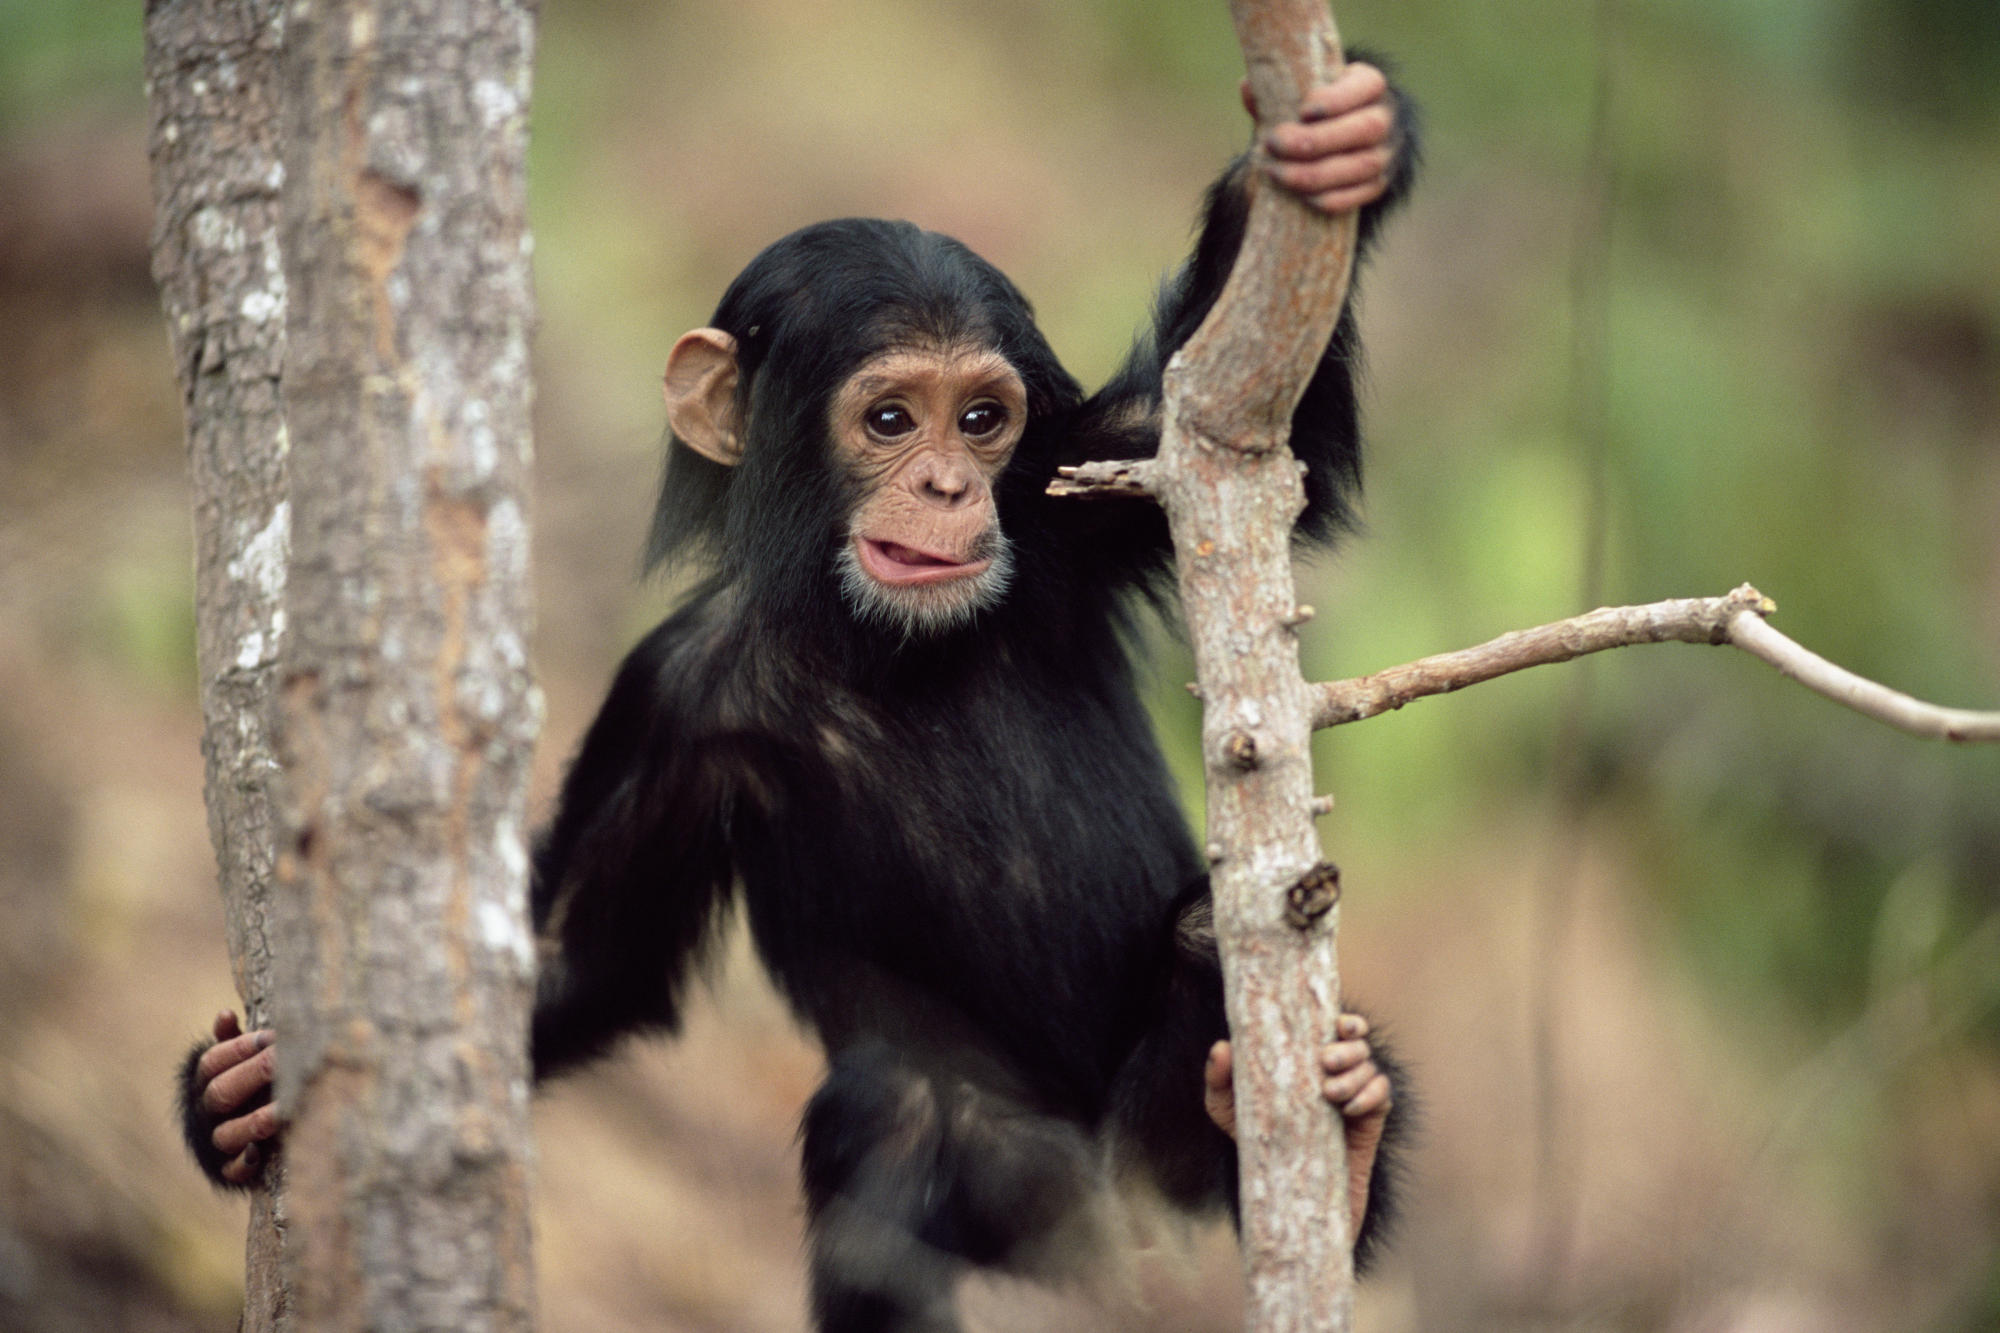 animals, monkeys, chimpanzee - desktop wallpaper